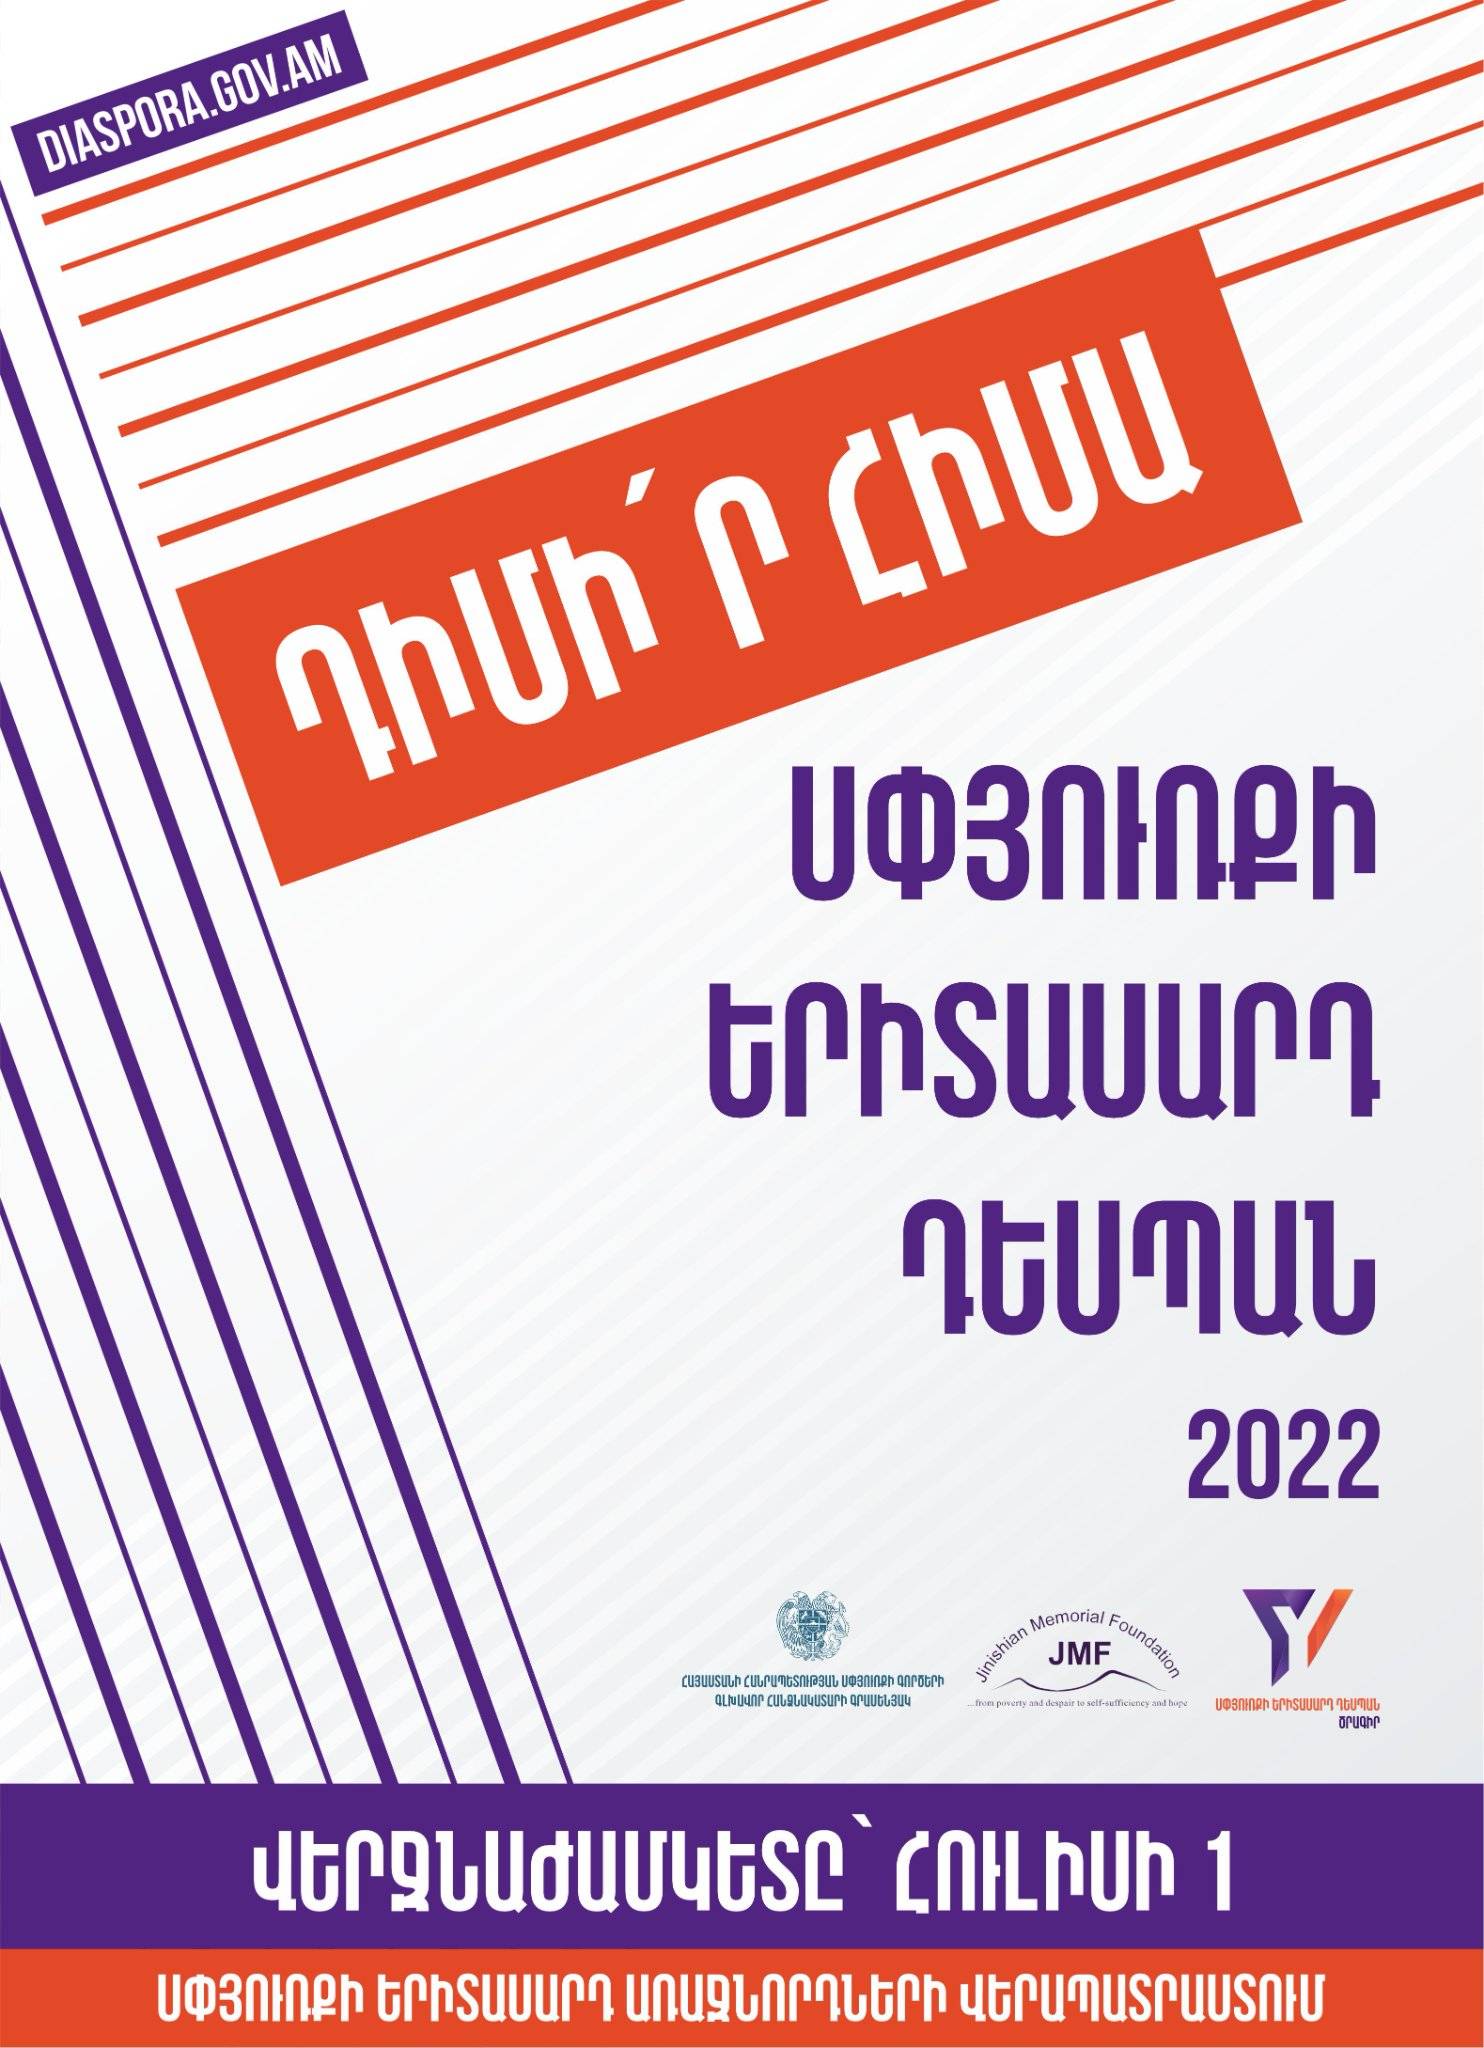 Junge Botschafter der Diaspora - 2022